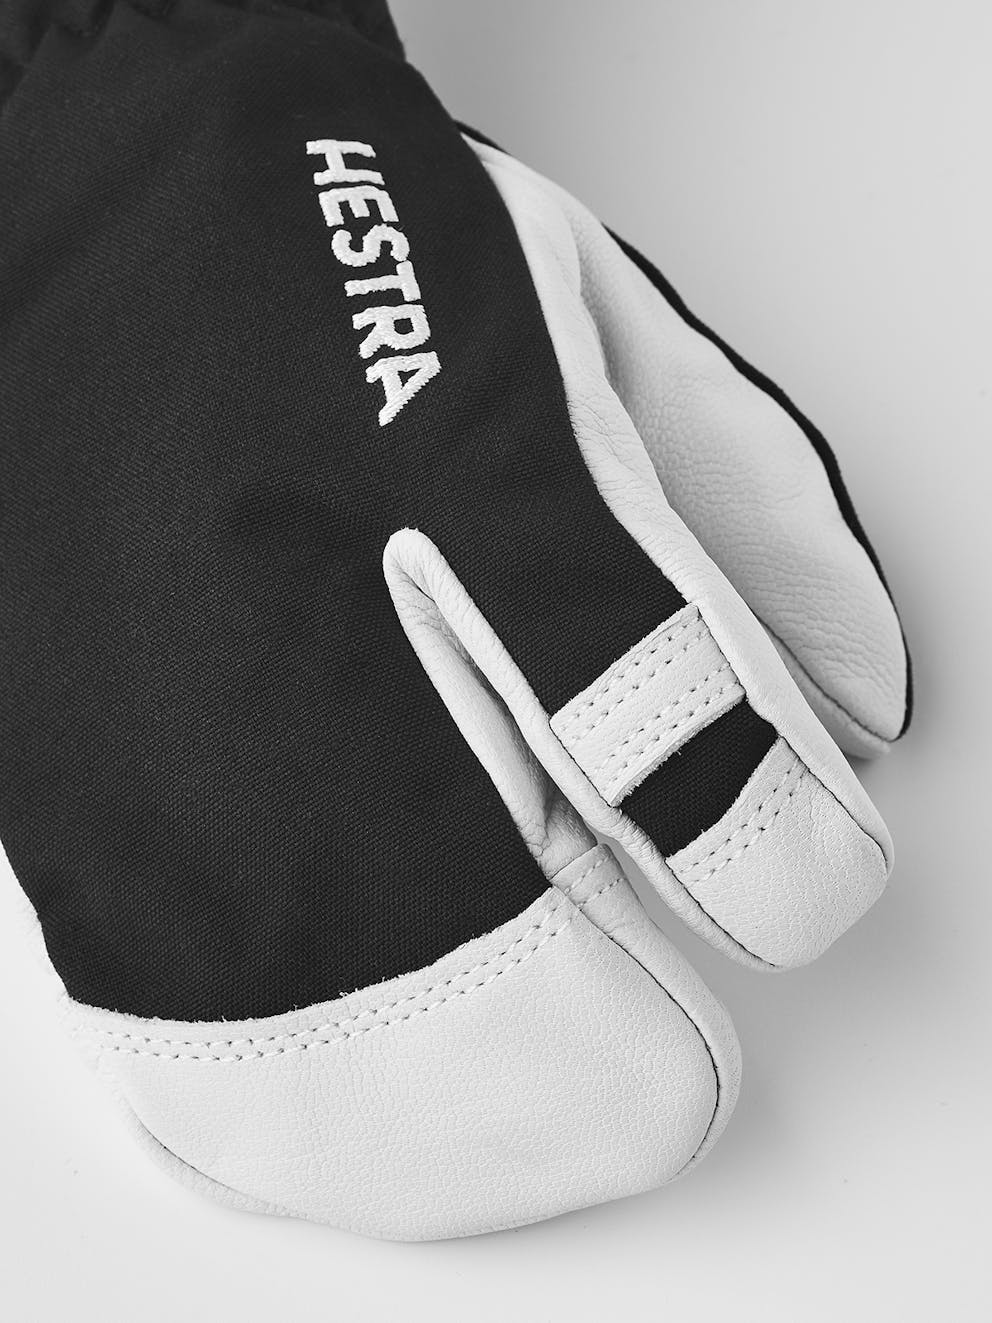 Hestra 3-Finger Army Leather Heli Ski Black Gants de ski : Snowleader